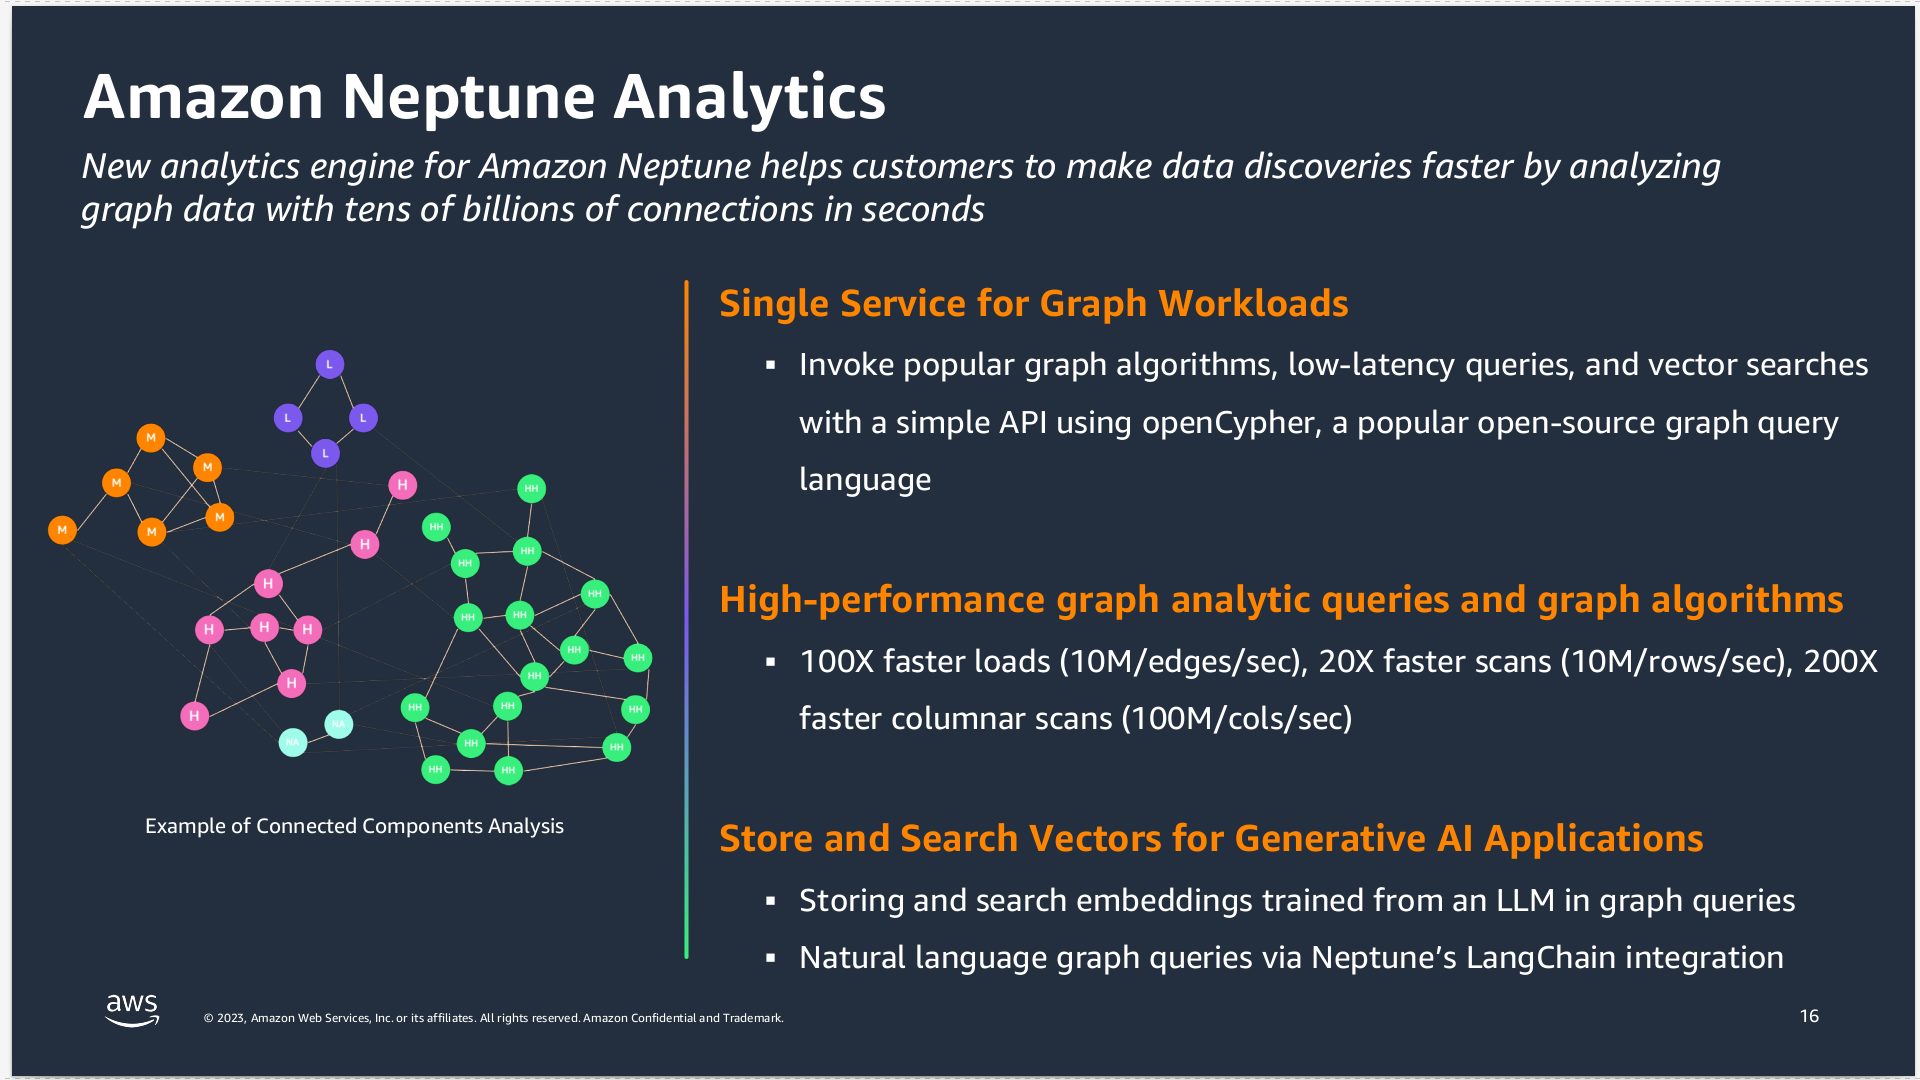 New analytics engine for Amazon Neptune